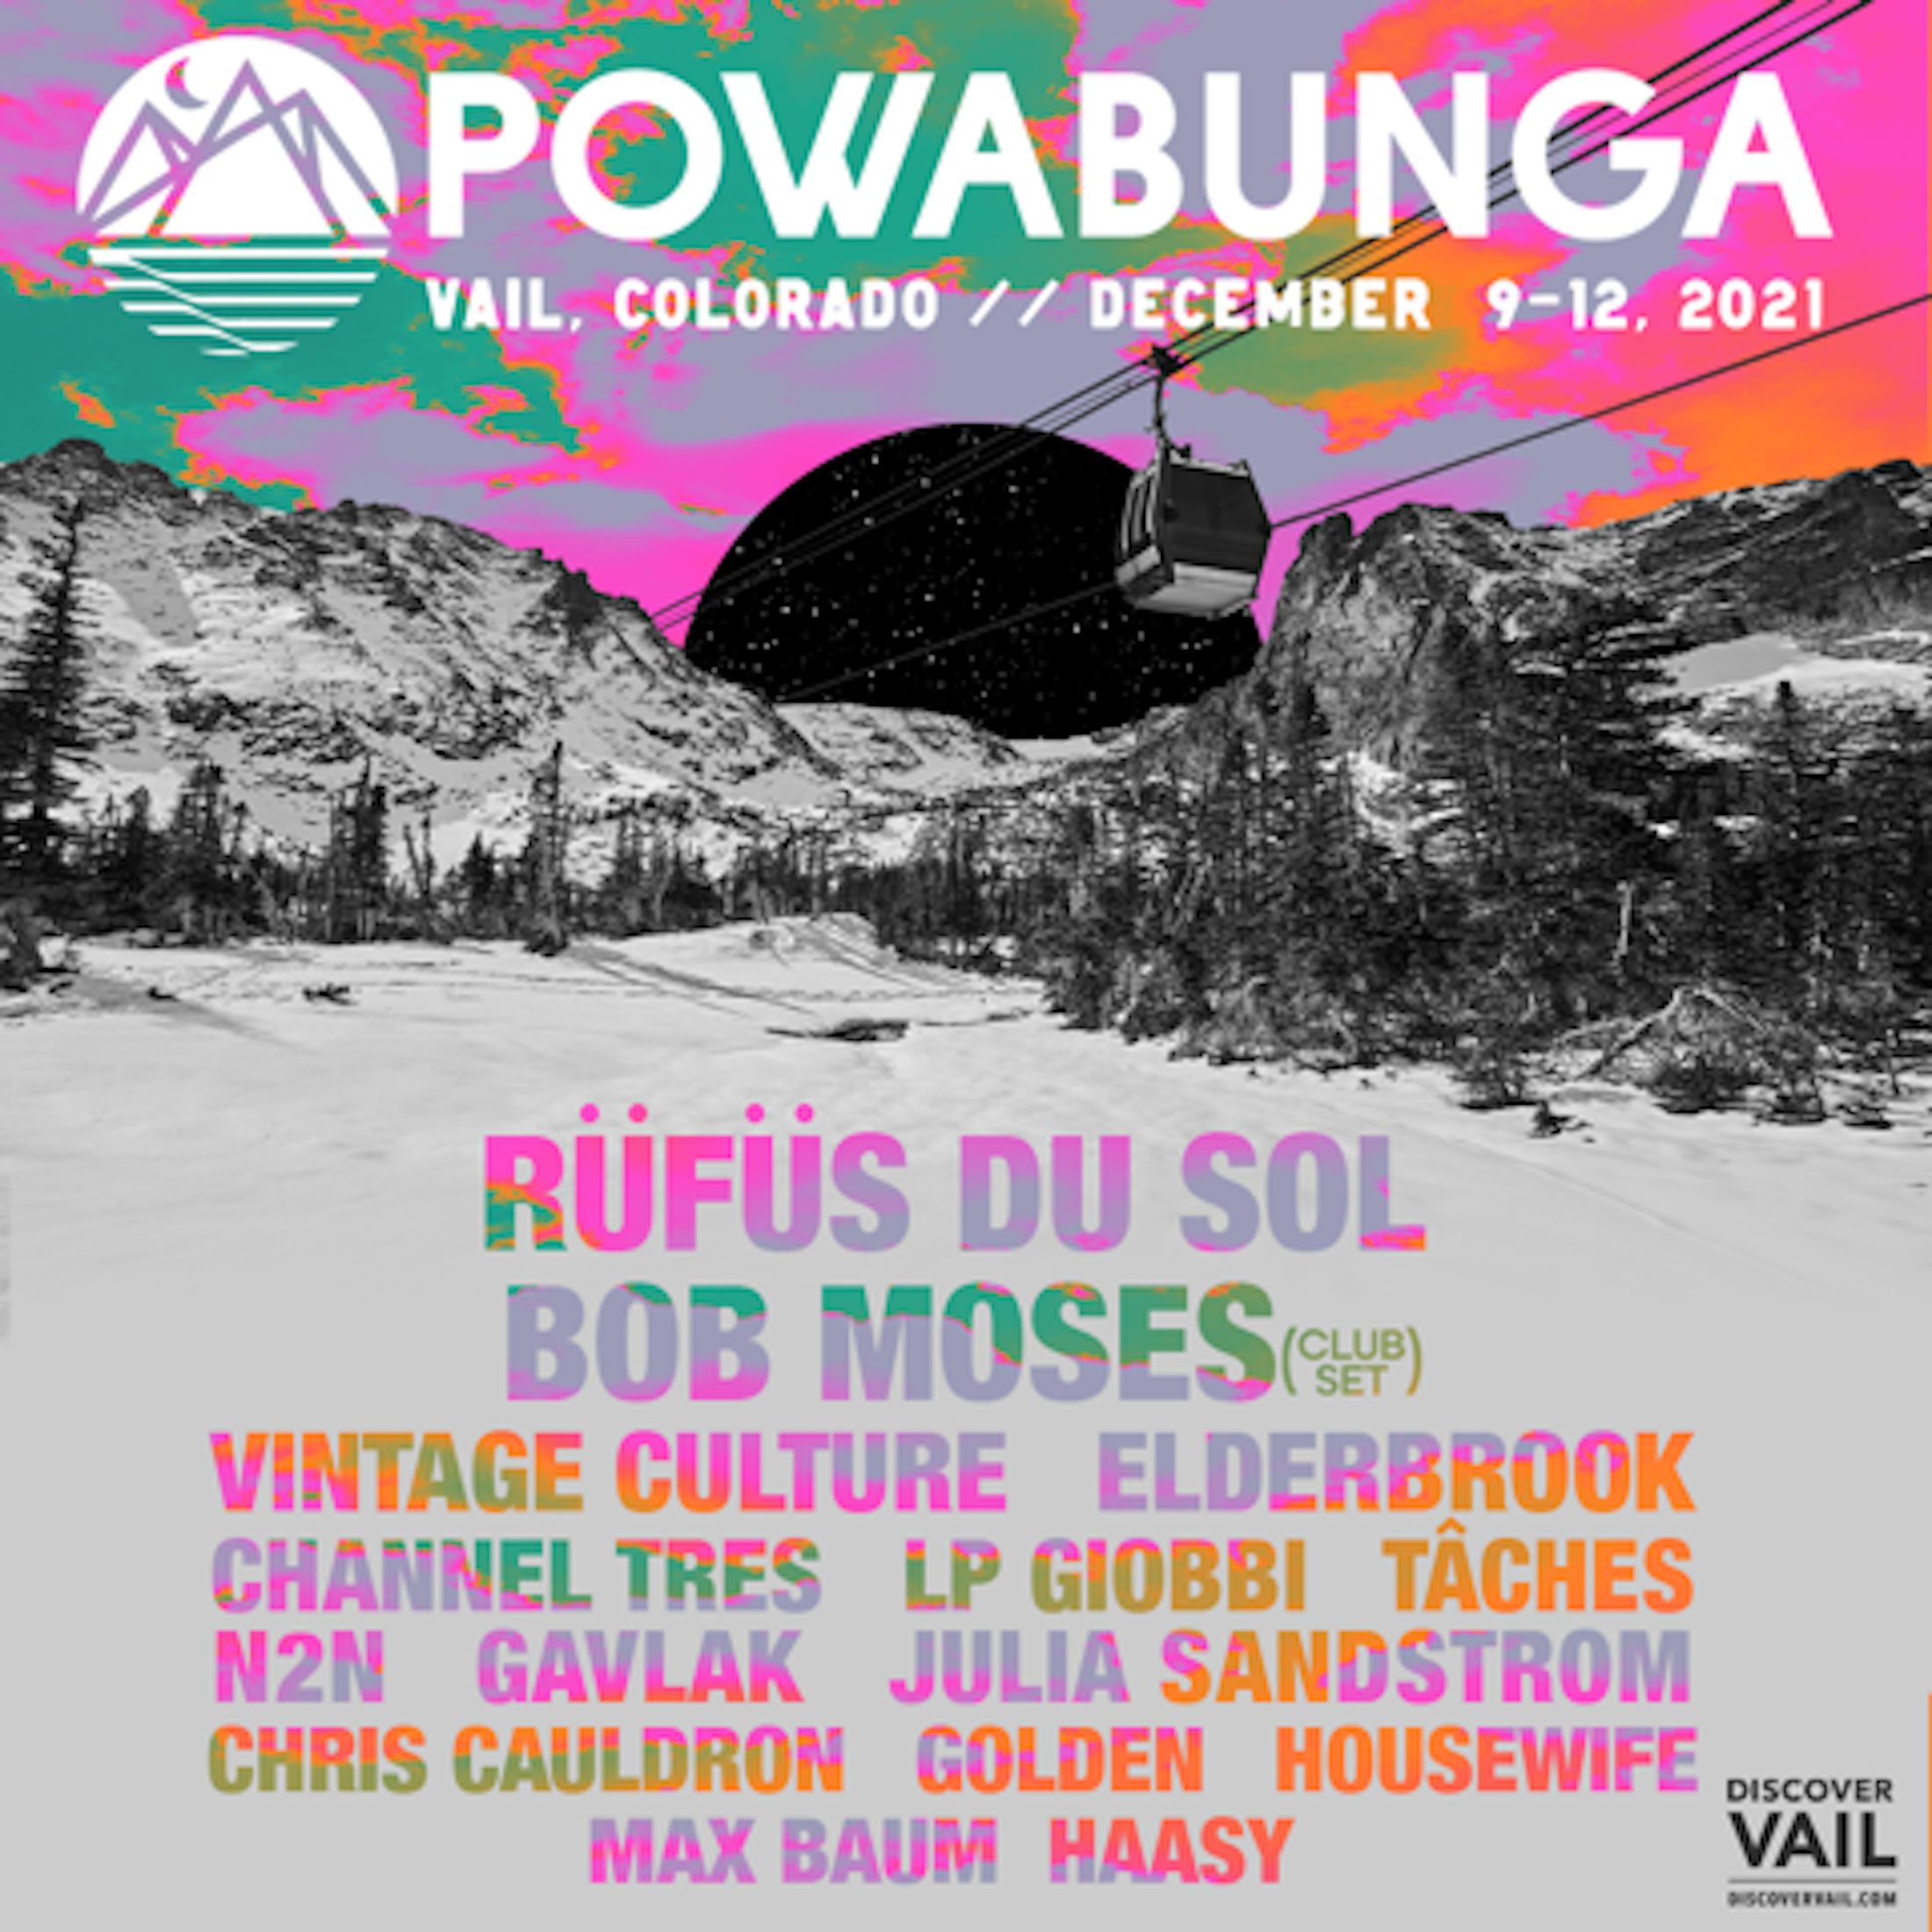 Powabunga 2021 Announces Massive Vail Lineup For December Festival 